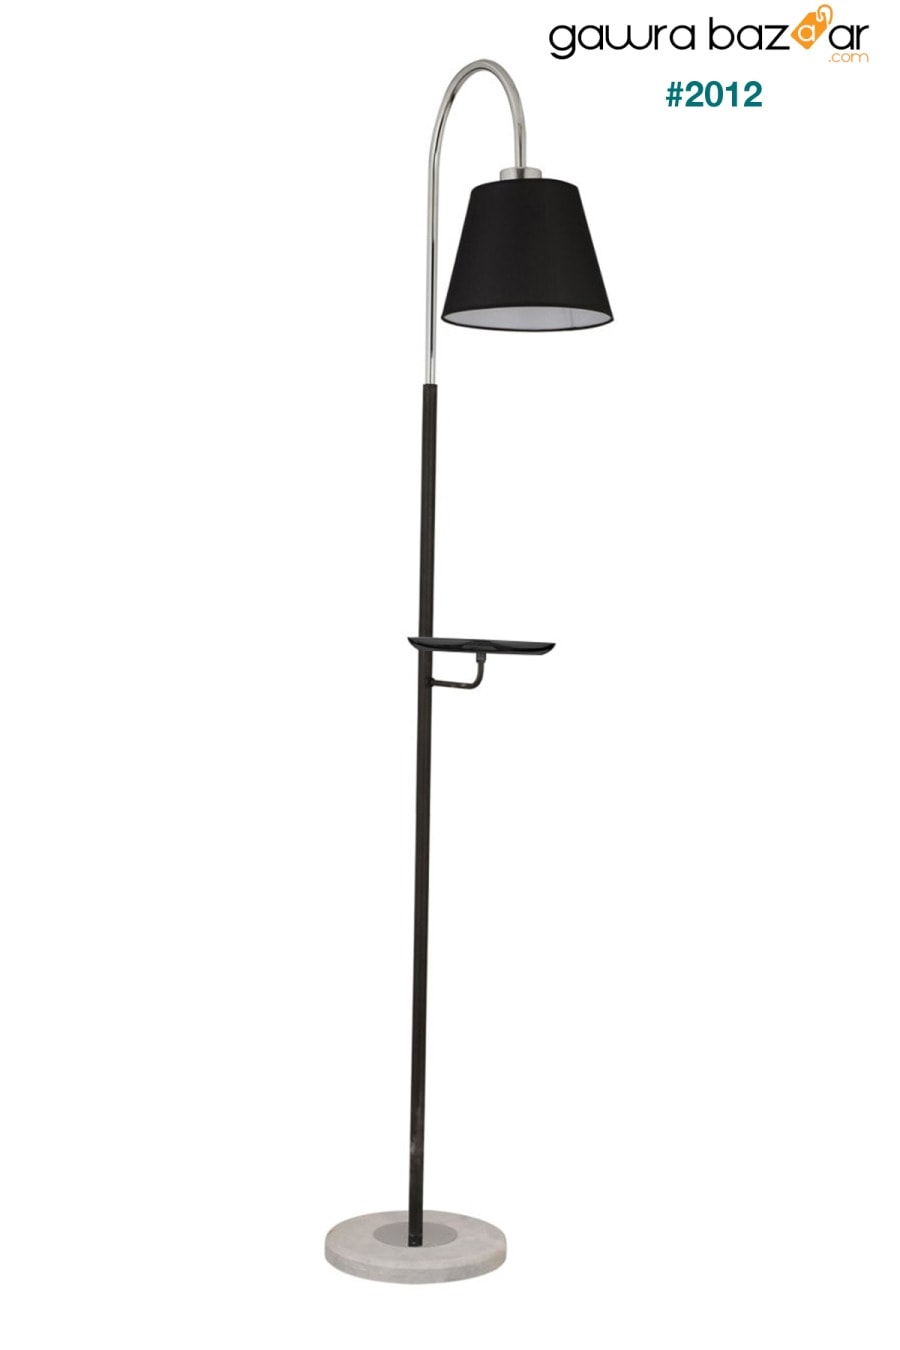 Lumina Black Cap Chrome Modern Design Floor Lampshade Lamp Metal Floor Lamp Apliqa 2